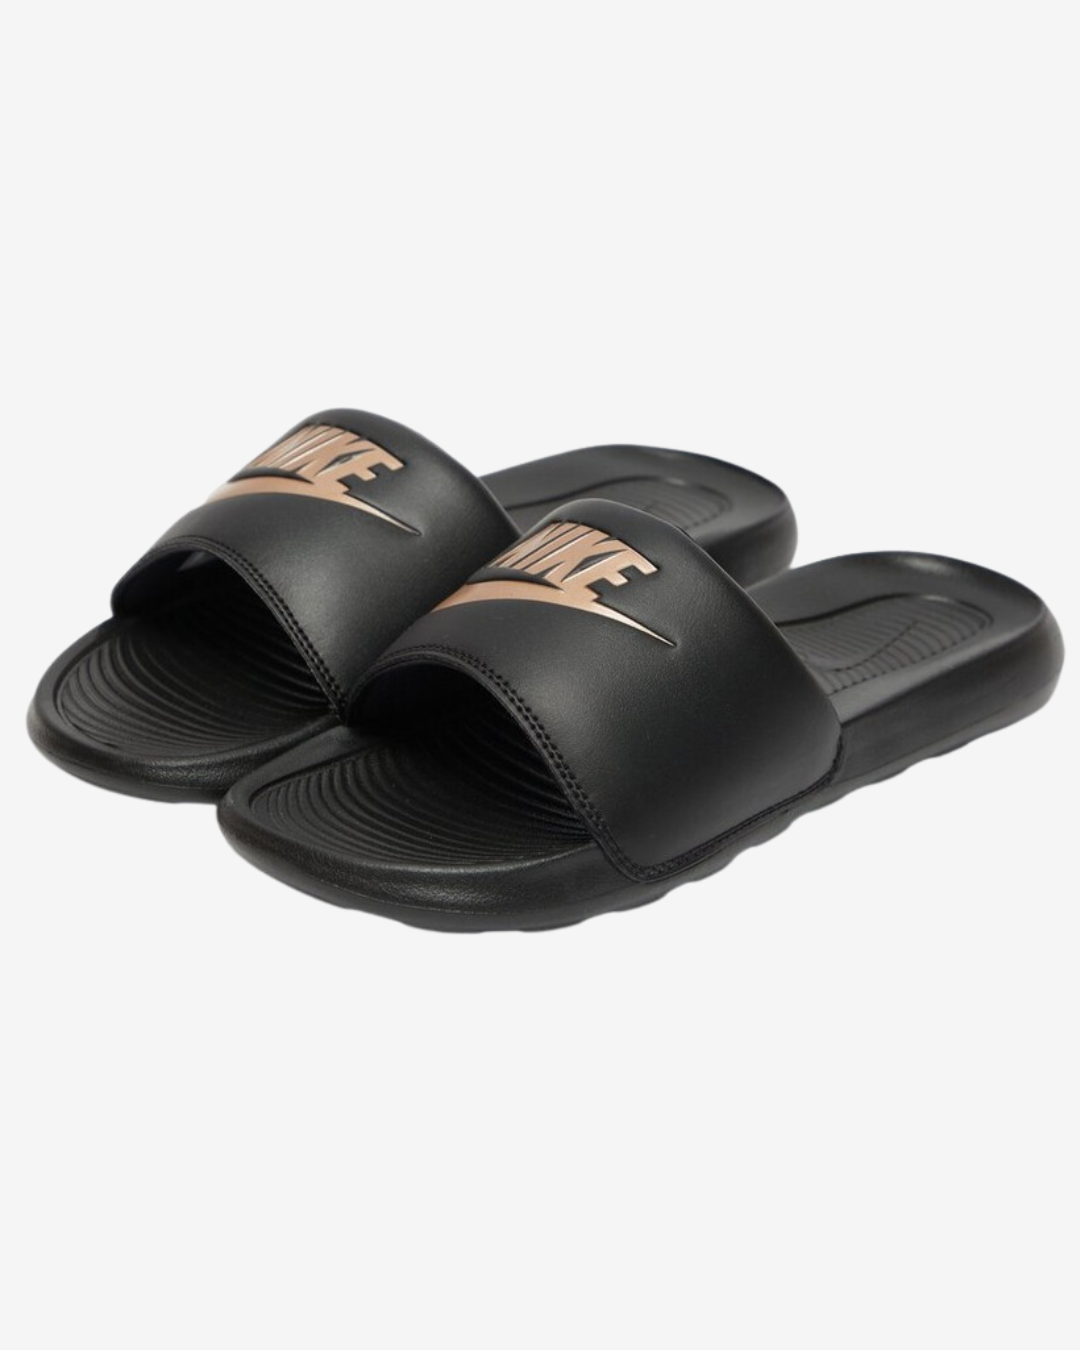 Se Nike Victori slippers - Sort / Bronze - Str. 43 - Modish.dk hos Modish.dk